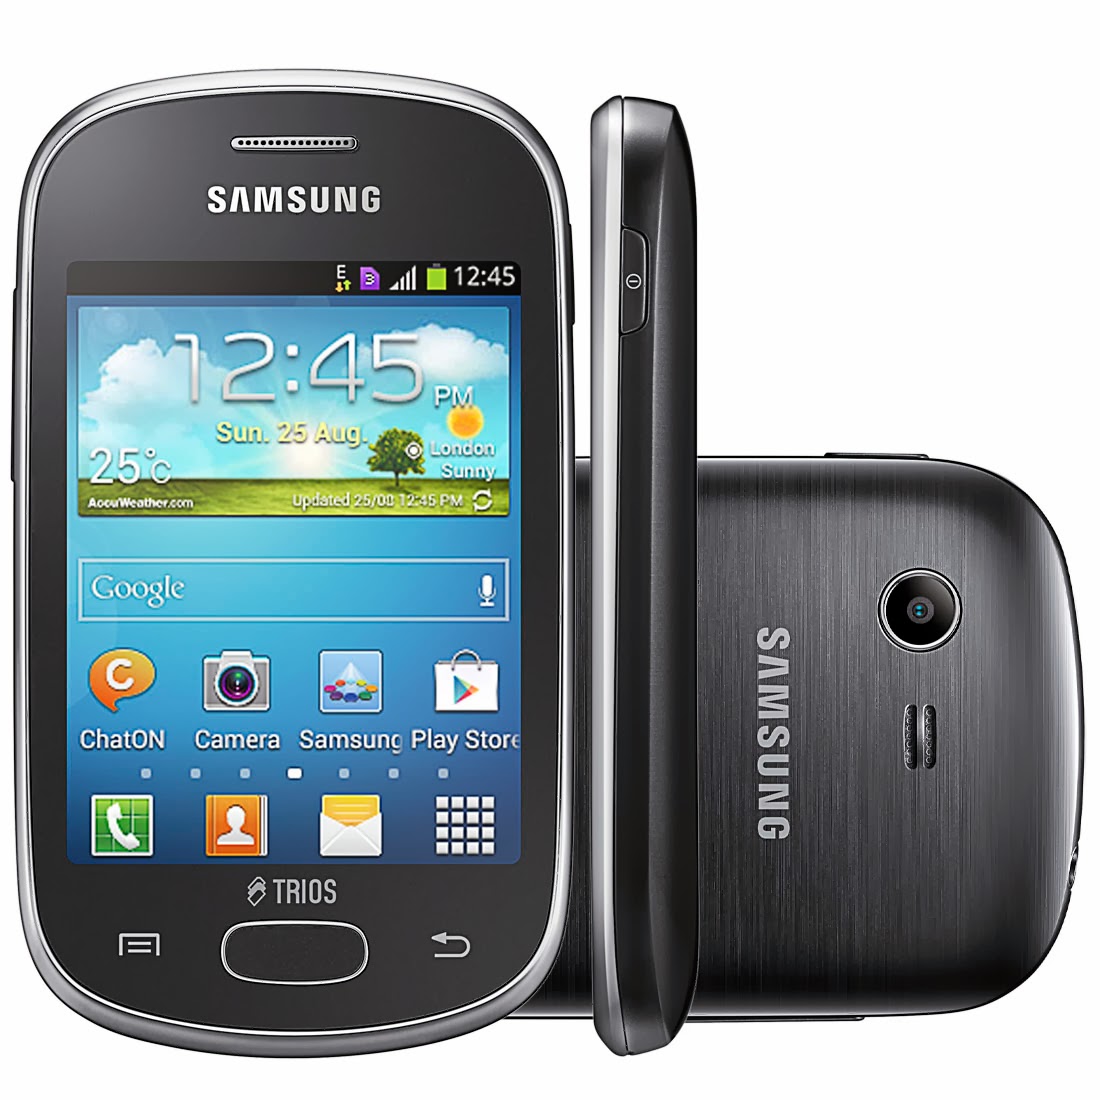  Harga  Spesifikasi Hp Samsung  Galaxy  Android Murah News 